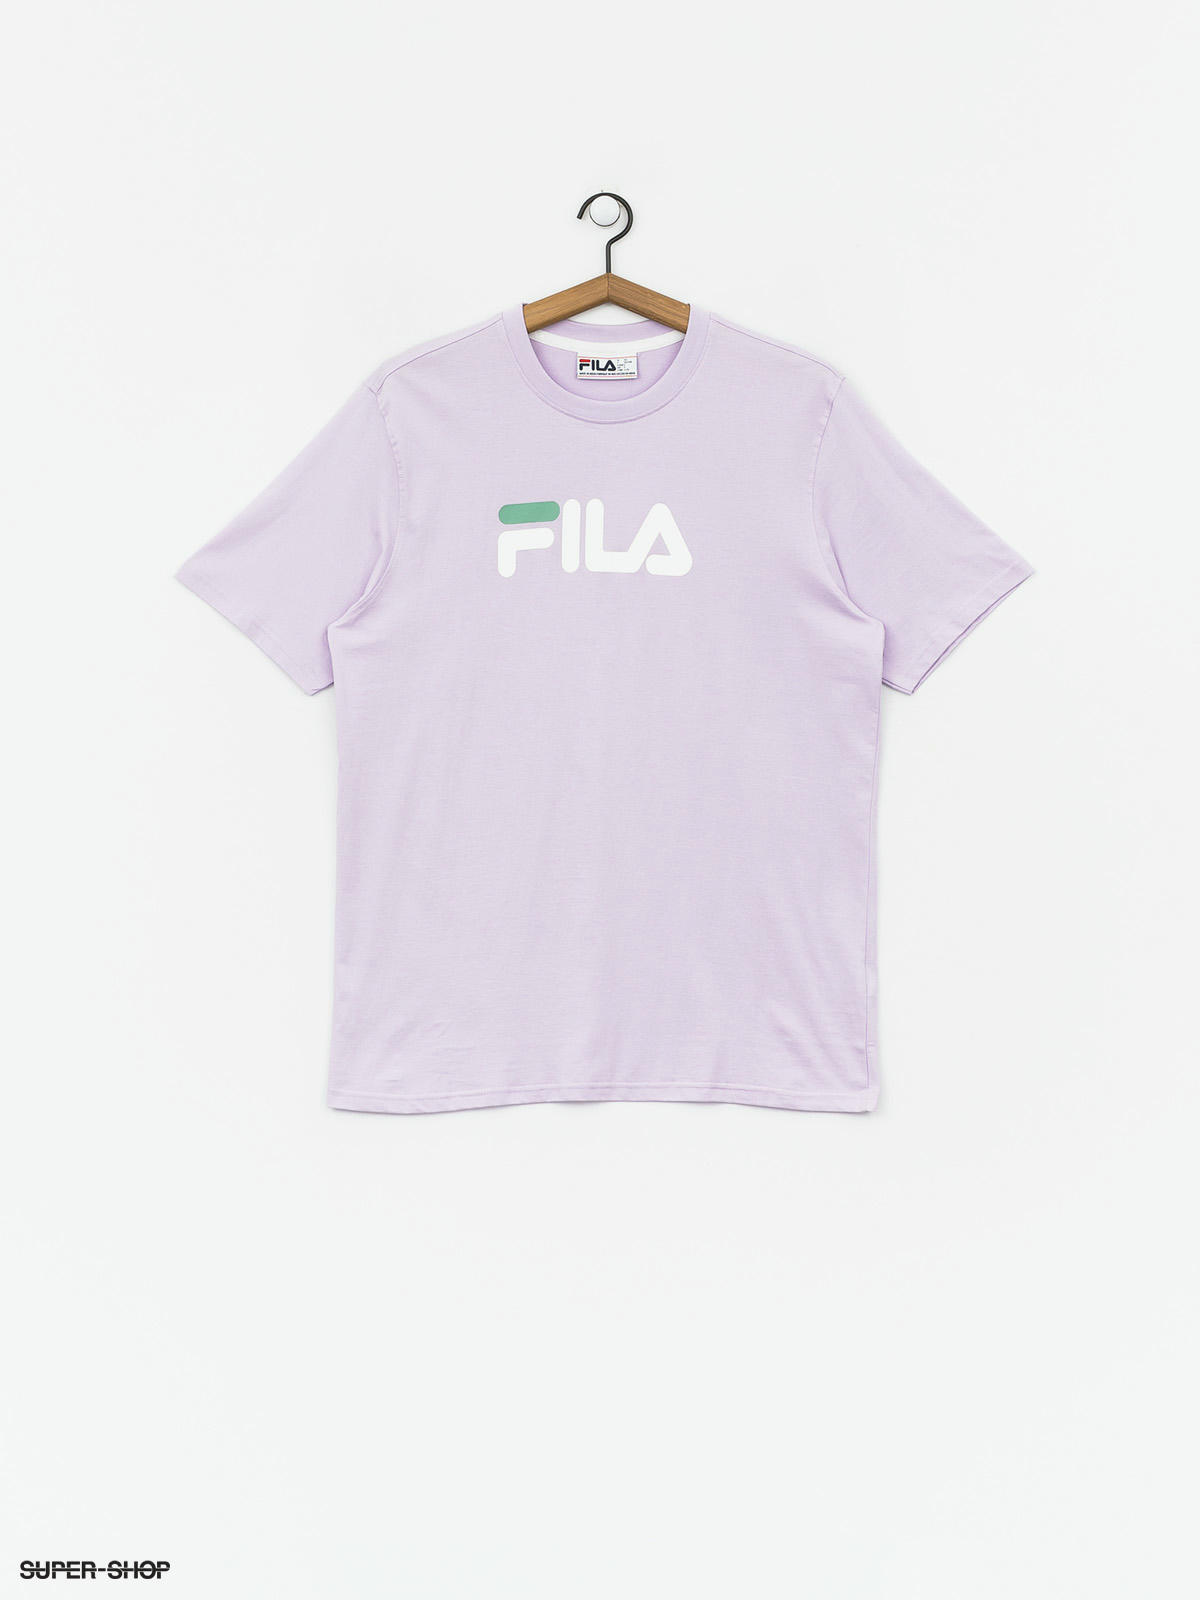 fila purple shirt